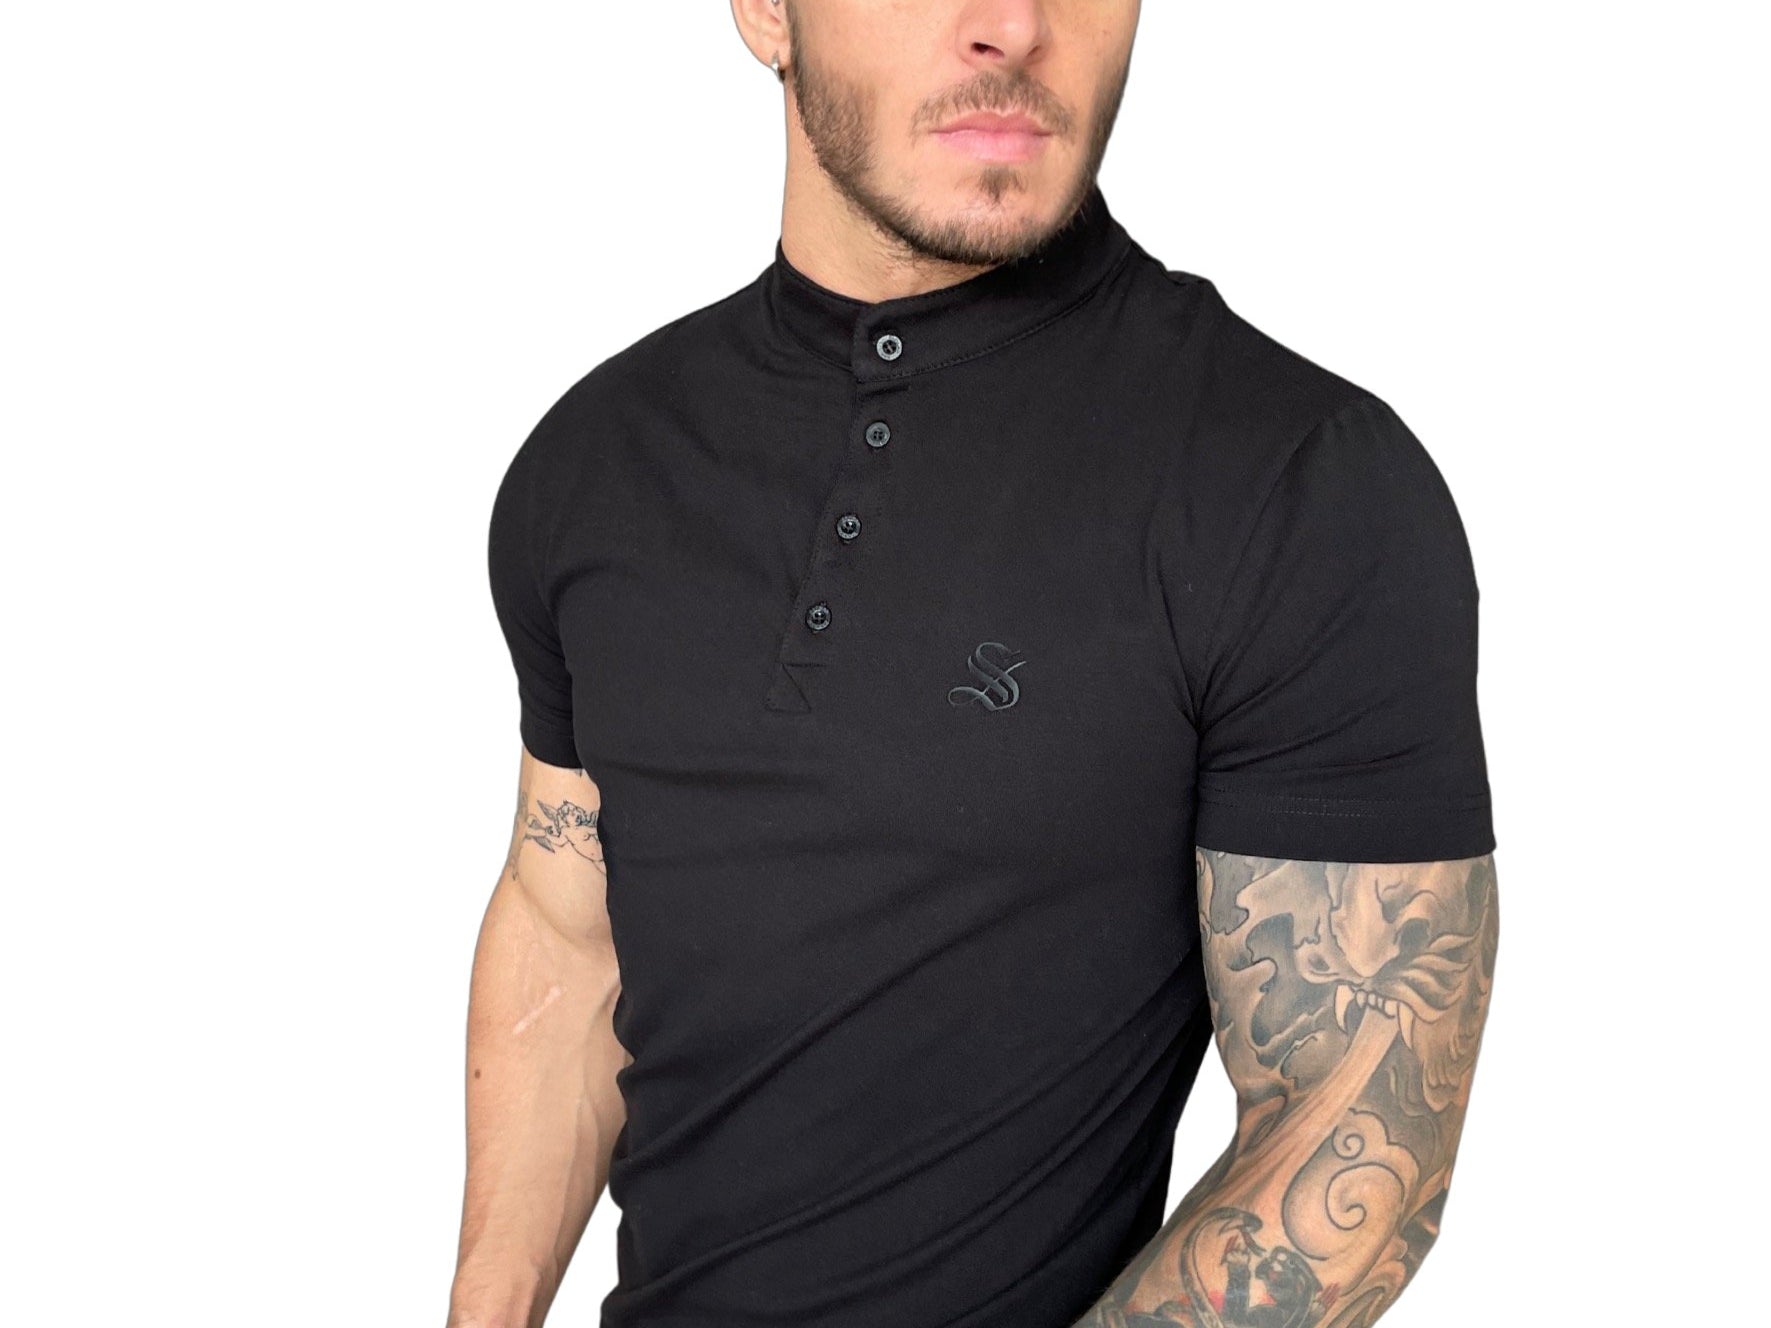 Prestige - Black T-shirt for Men (PRE-ORDER DISPATCH DATE 15 April 2023) - Sarman Fashion - Wholesale Clothing Fashion Brand for Men from Canada